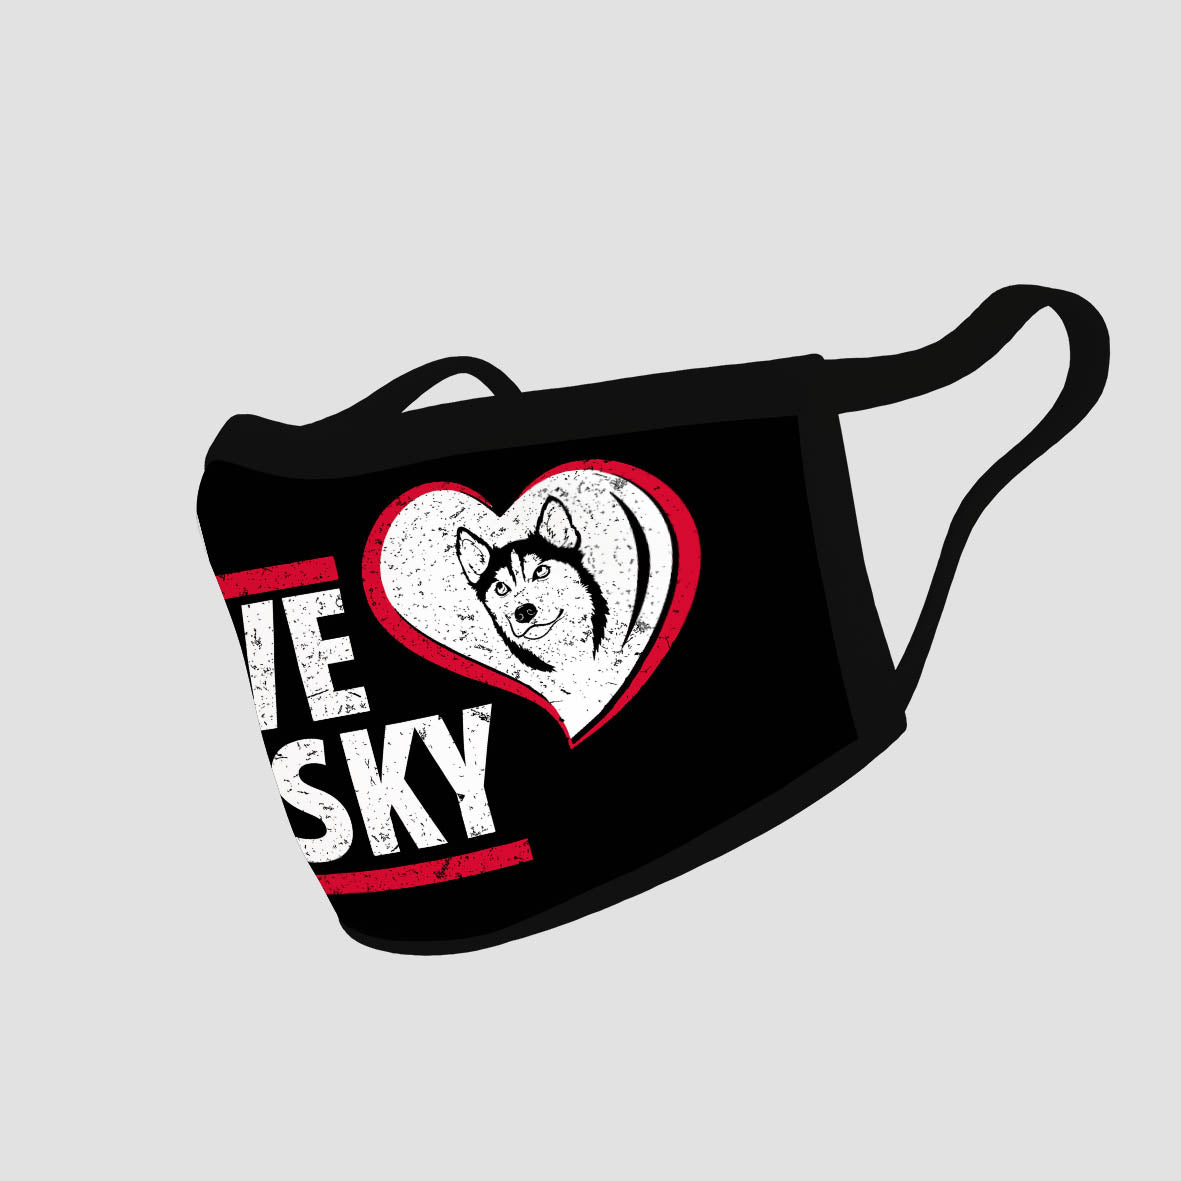 Dog Gift Idea - Love Husky For Dog Lovers - Cloth Mask